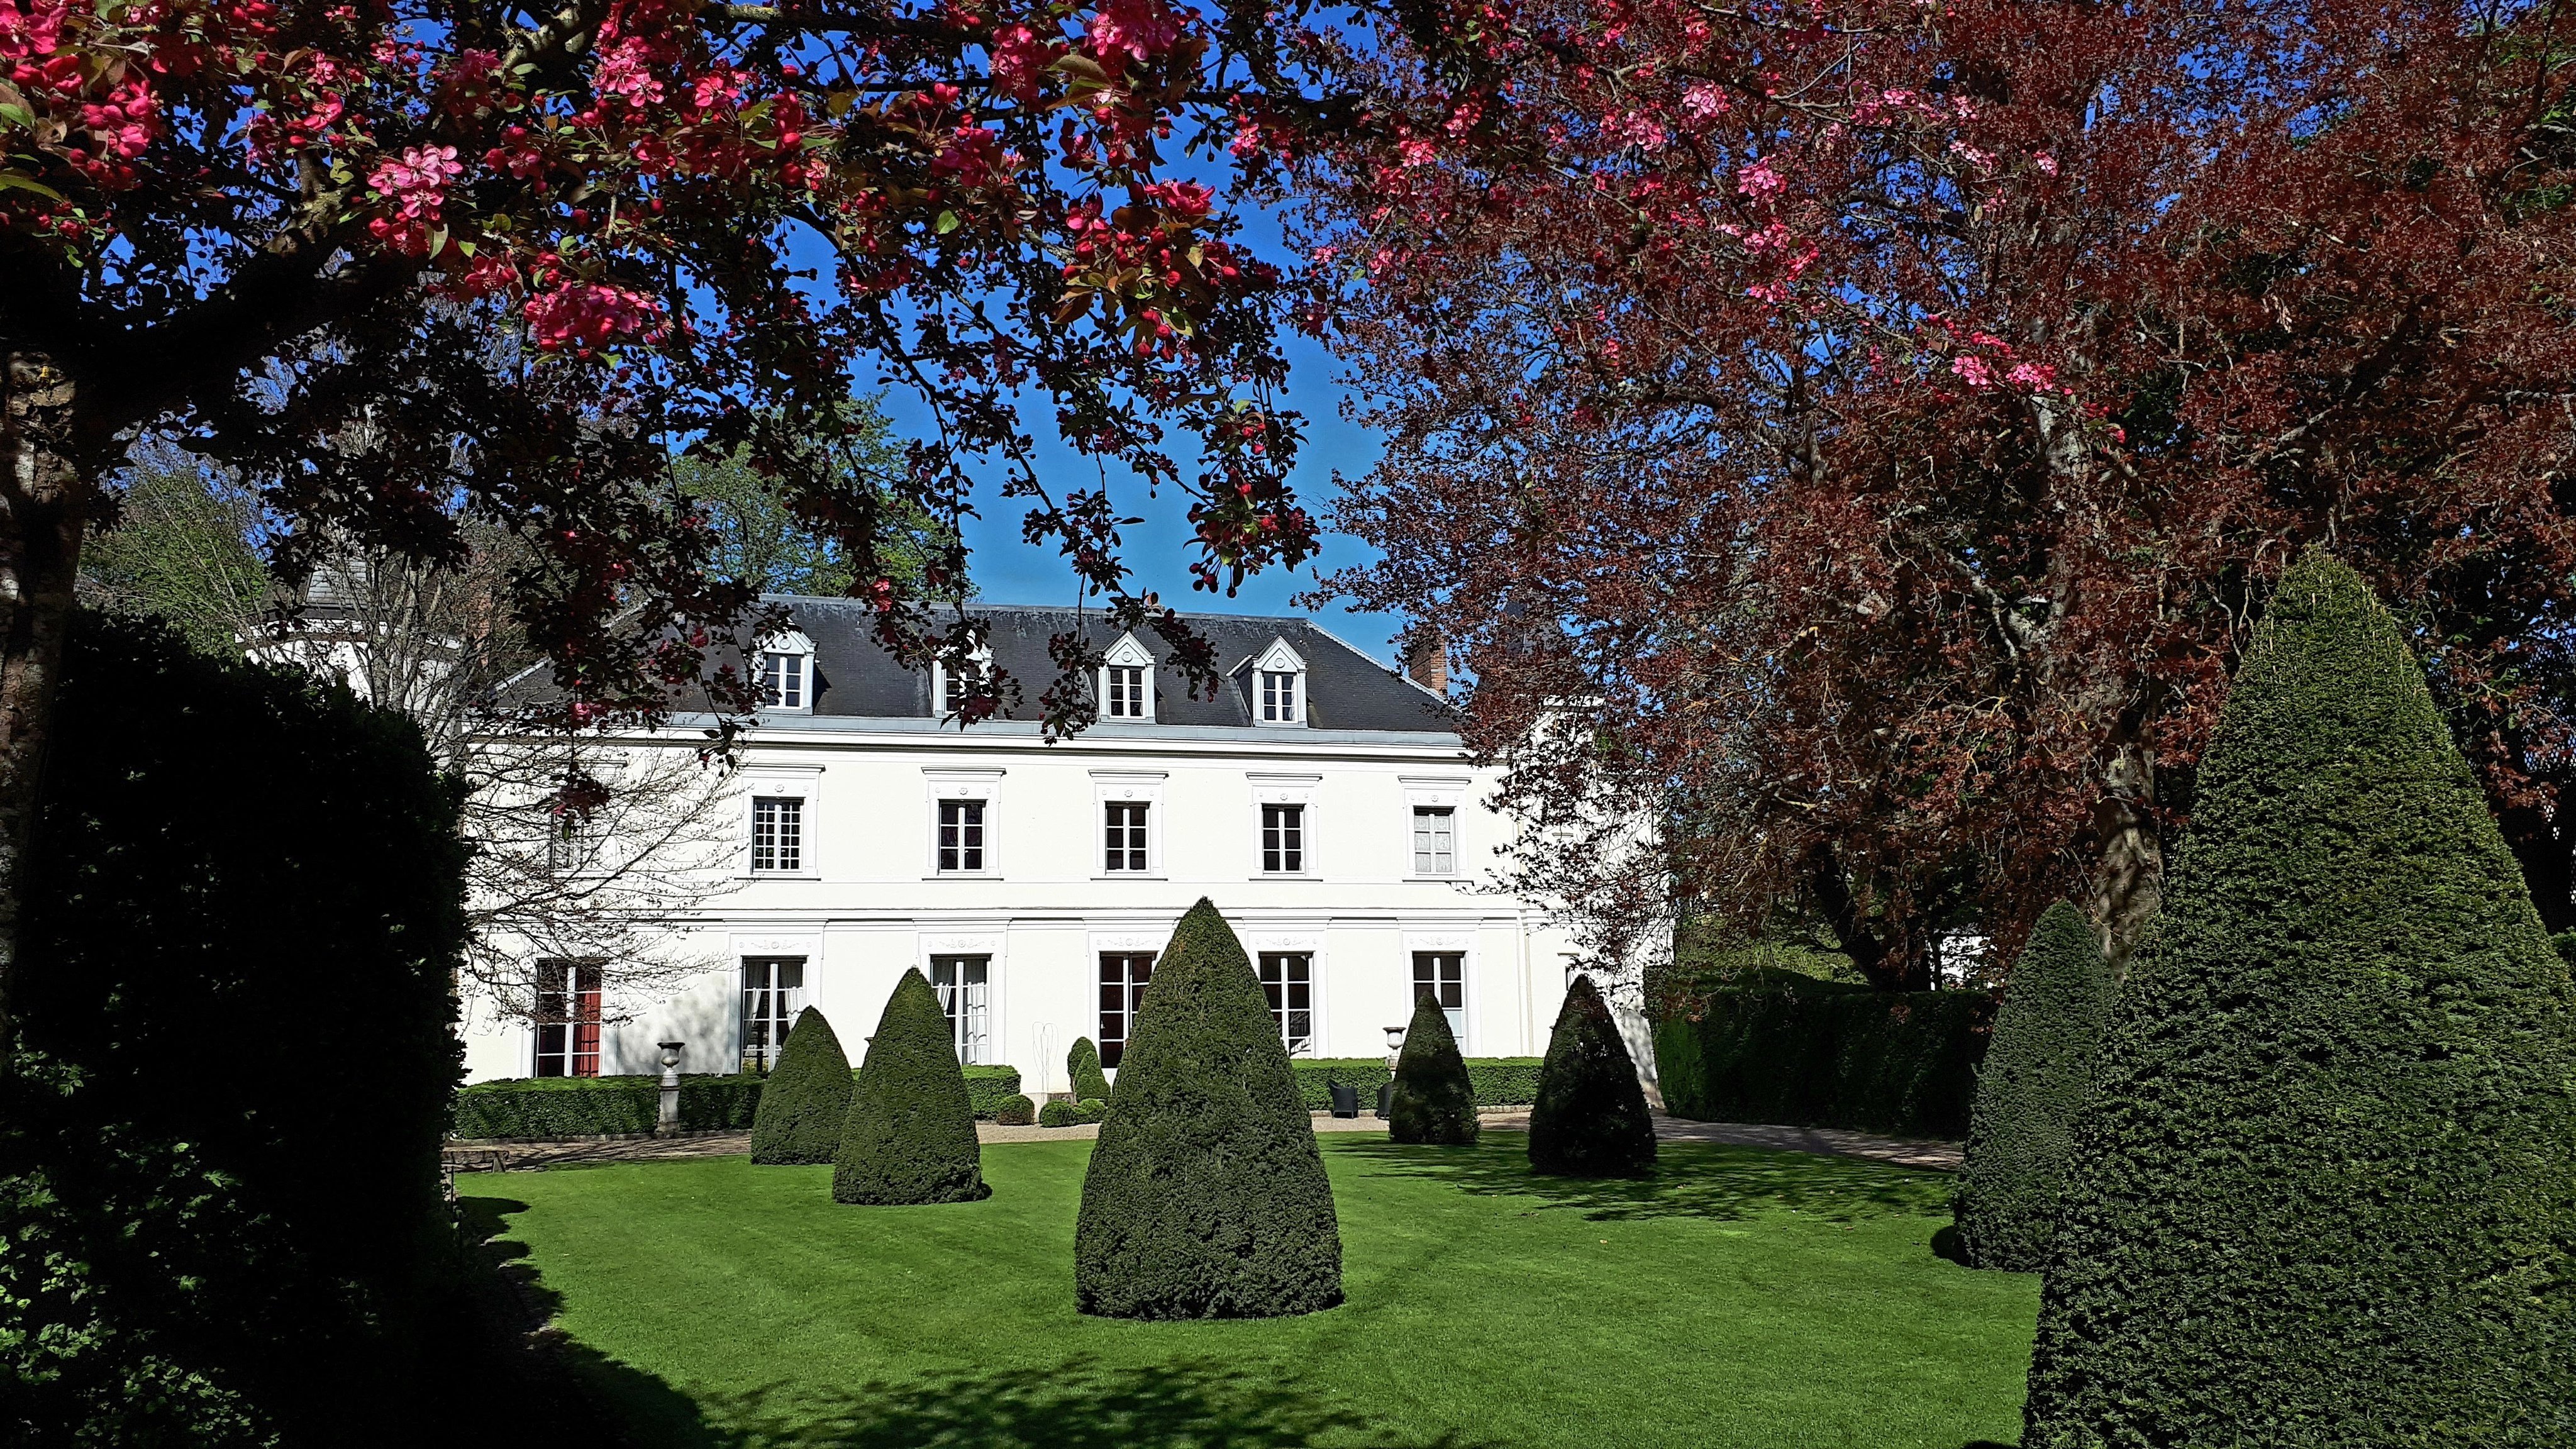 A 1,500-room château - Château de Fontainebleau